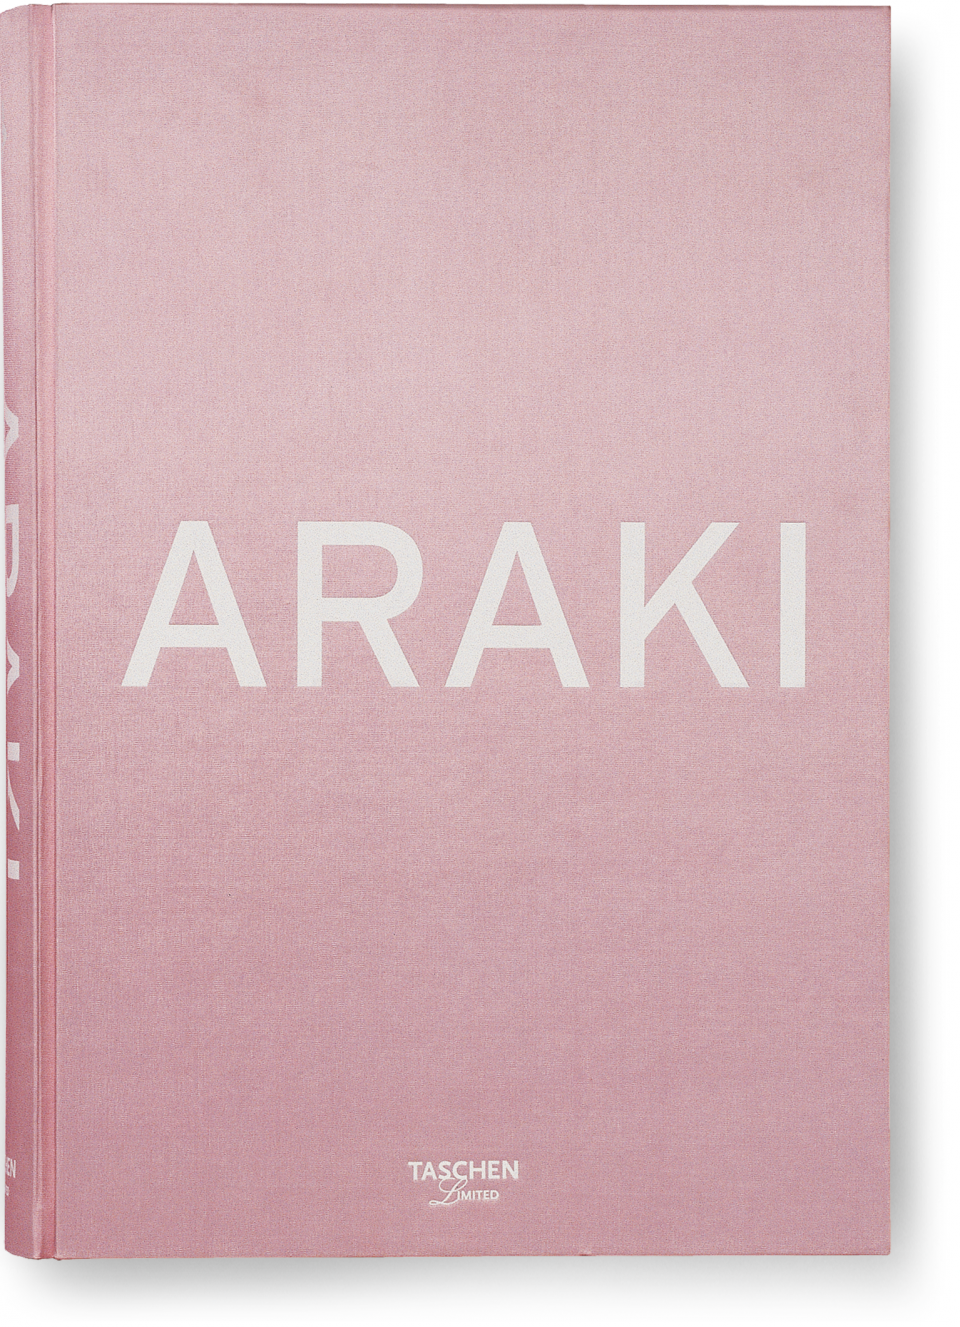 araki_su_int_cover_02603_1503121737_id_906862